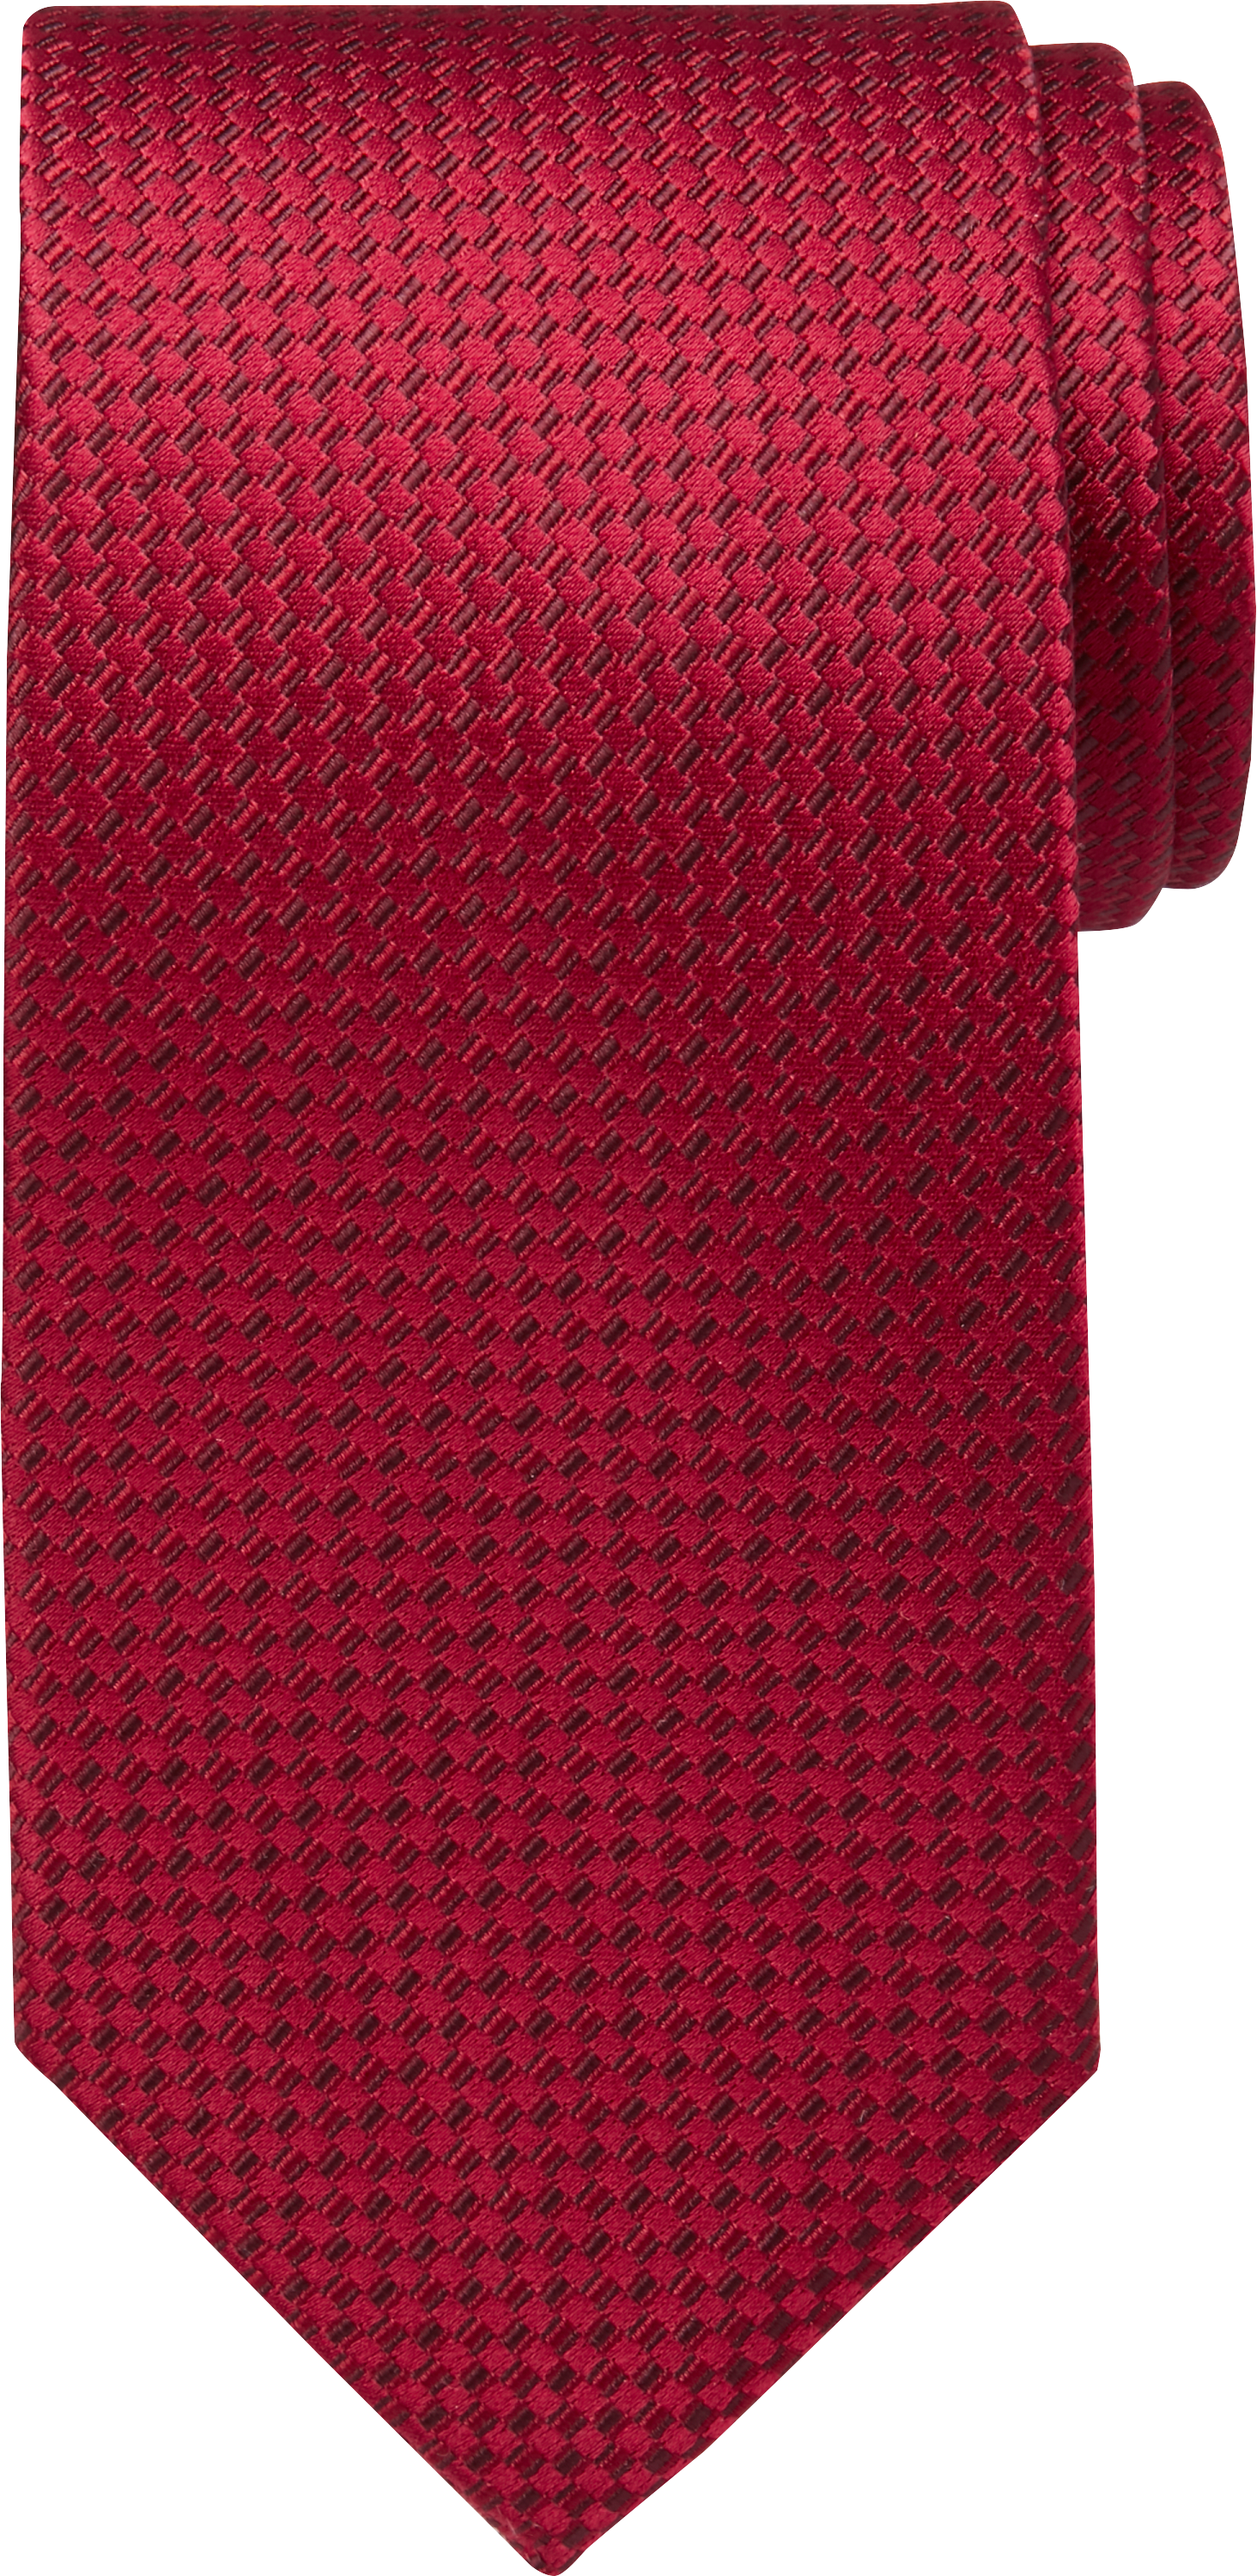 Pronto Uomo Red Patterned Narrow Tie - Men's Brands | Men's Wearhouse